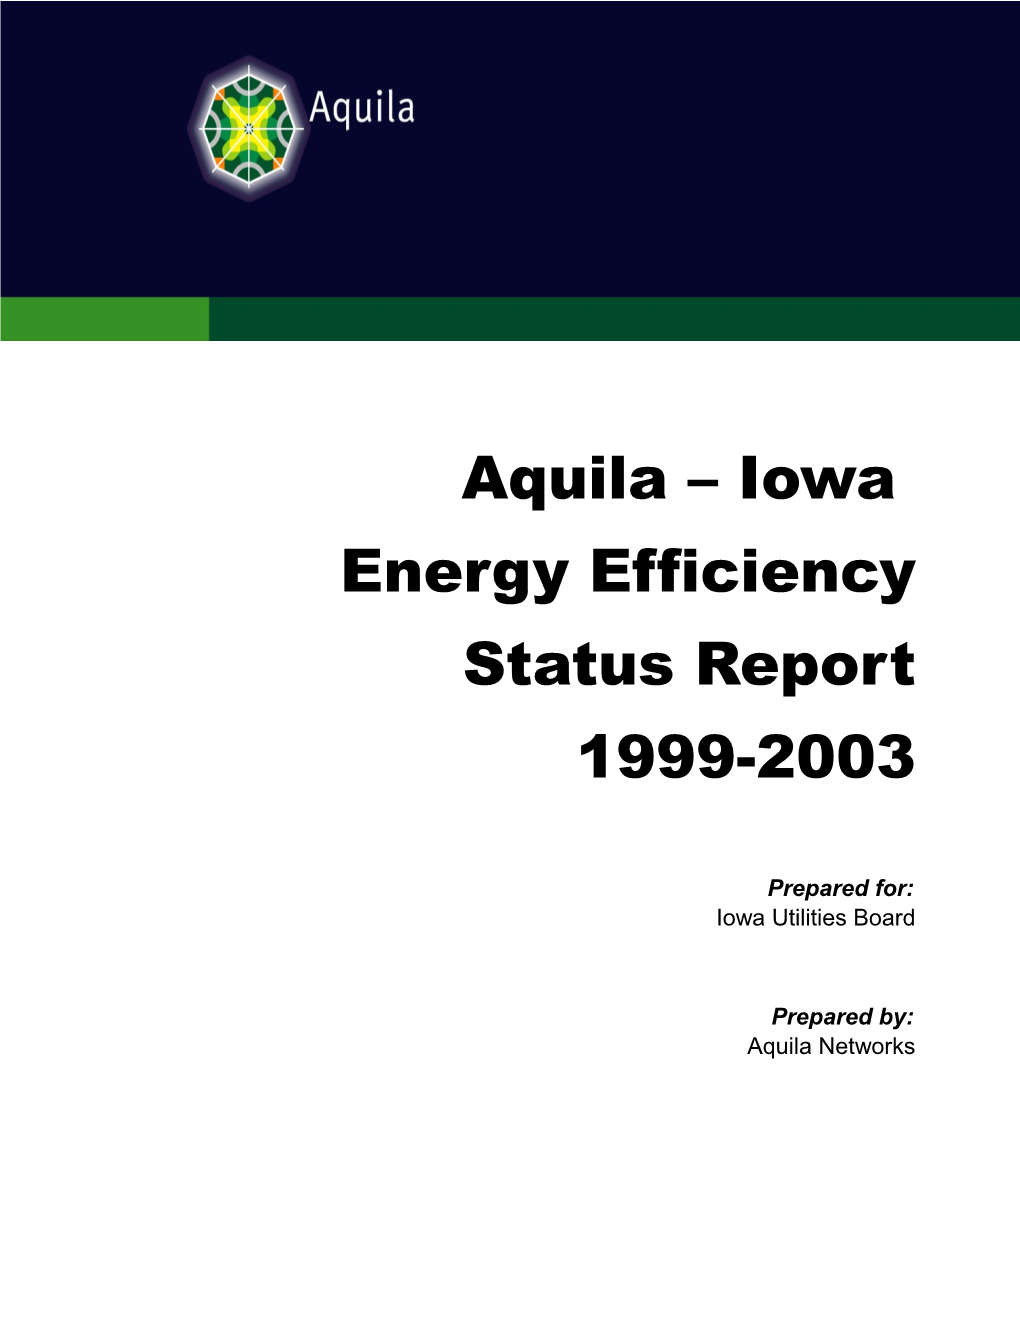 Aquila Iowa Energy Efficiency Status Report 1999-2003